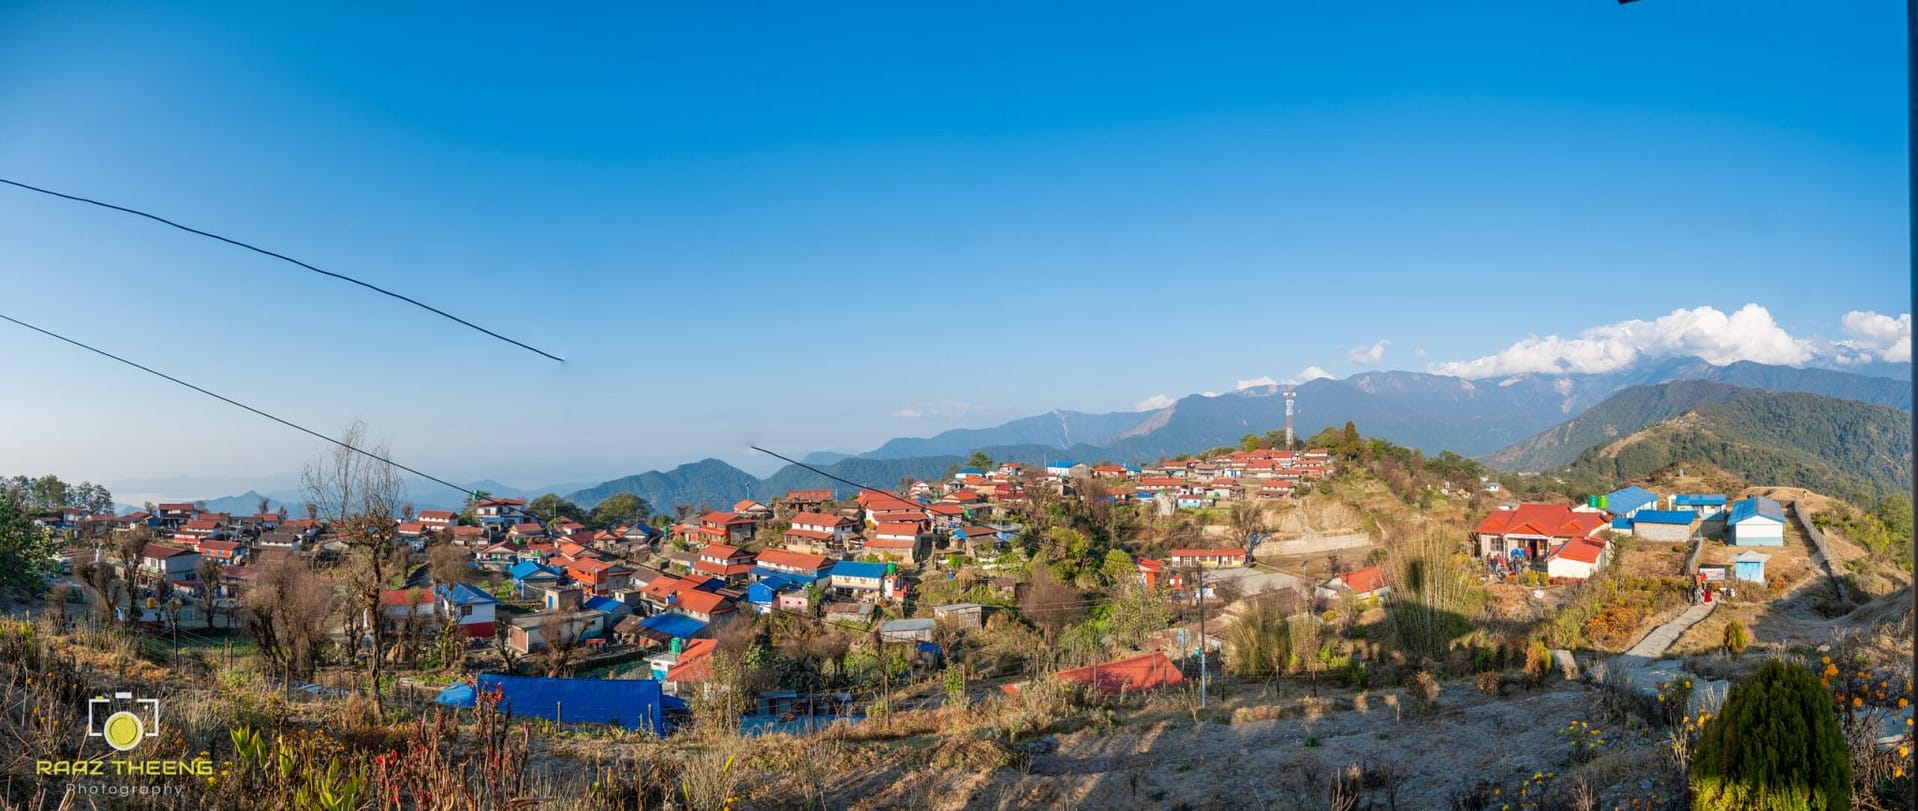 Ghale Gaun Village Lamjung